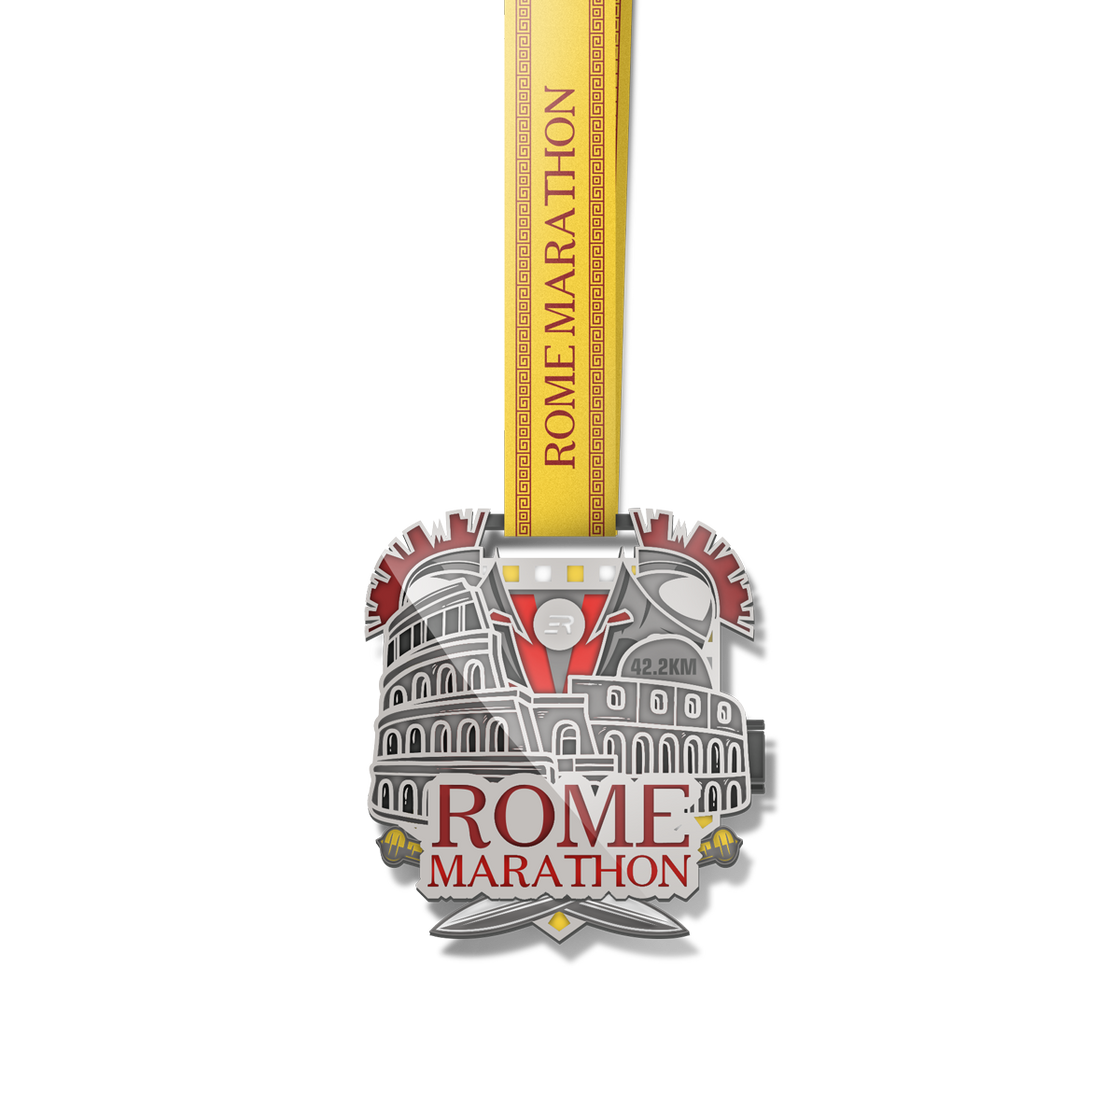 ROME Marathon | The last race of the Year | December 31st